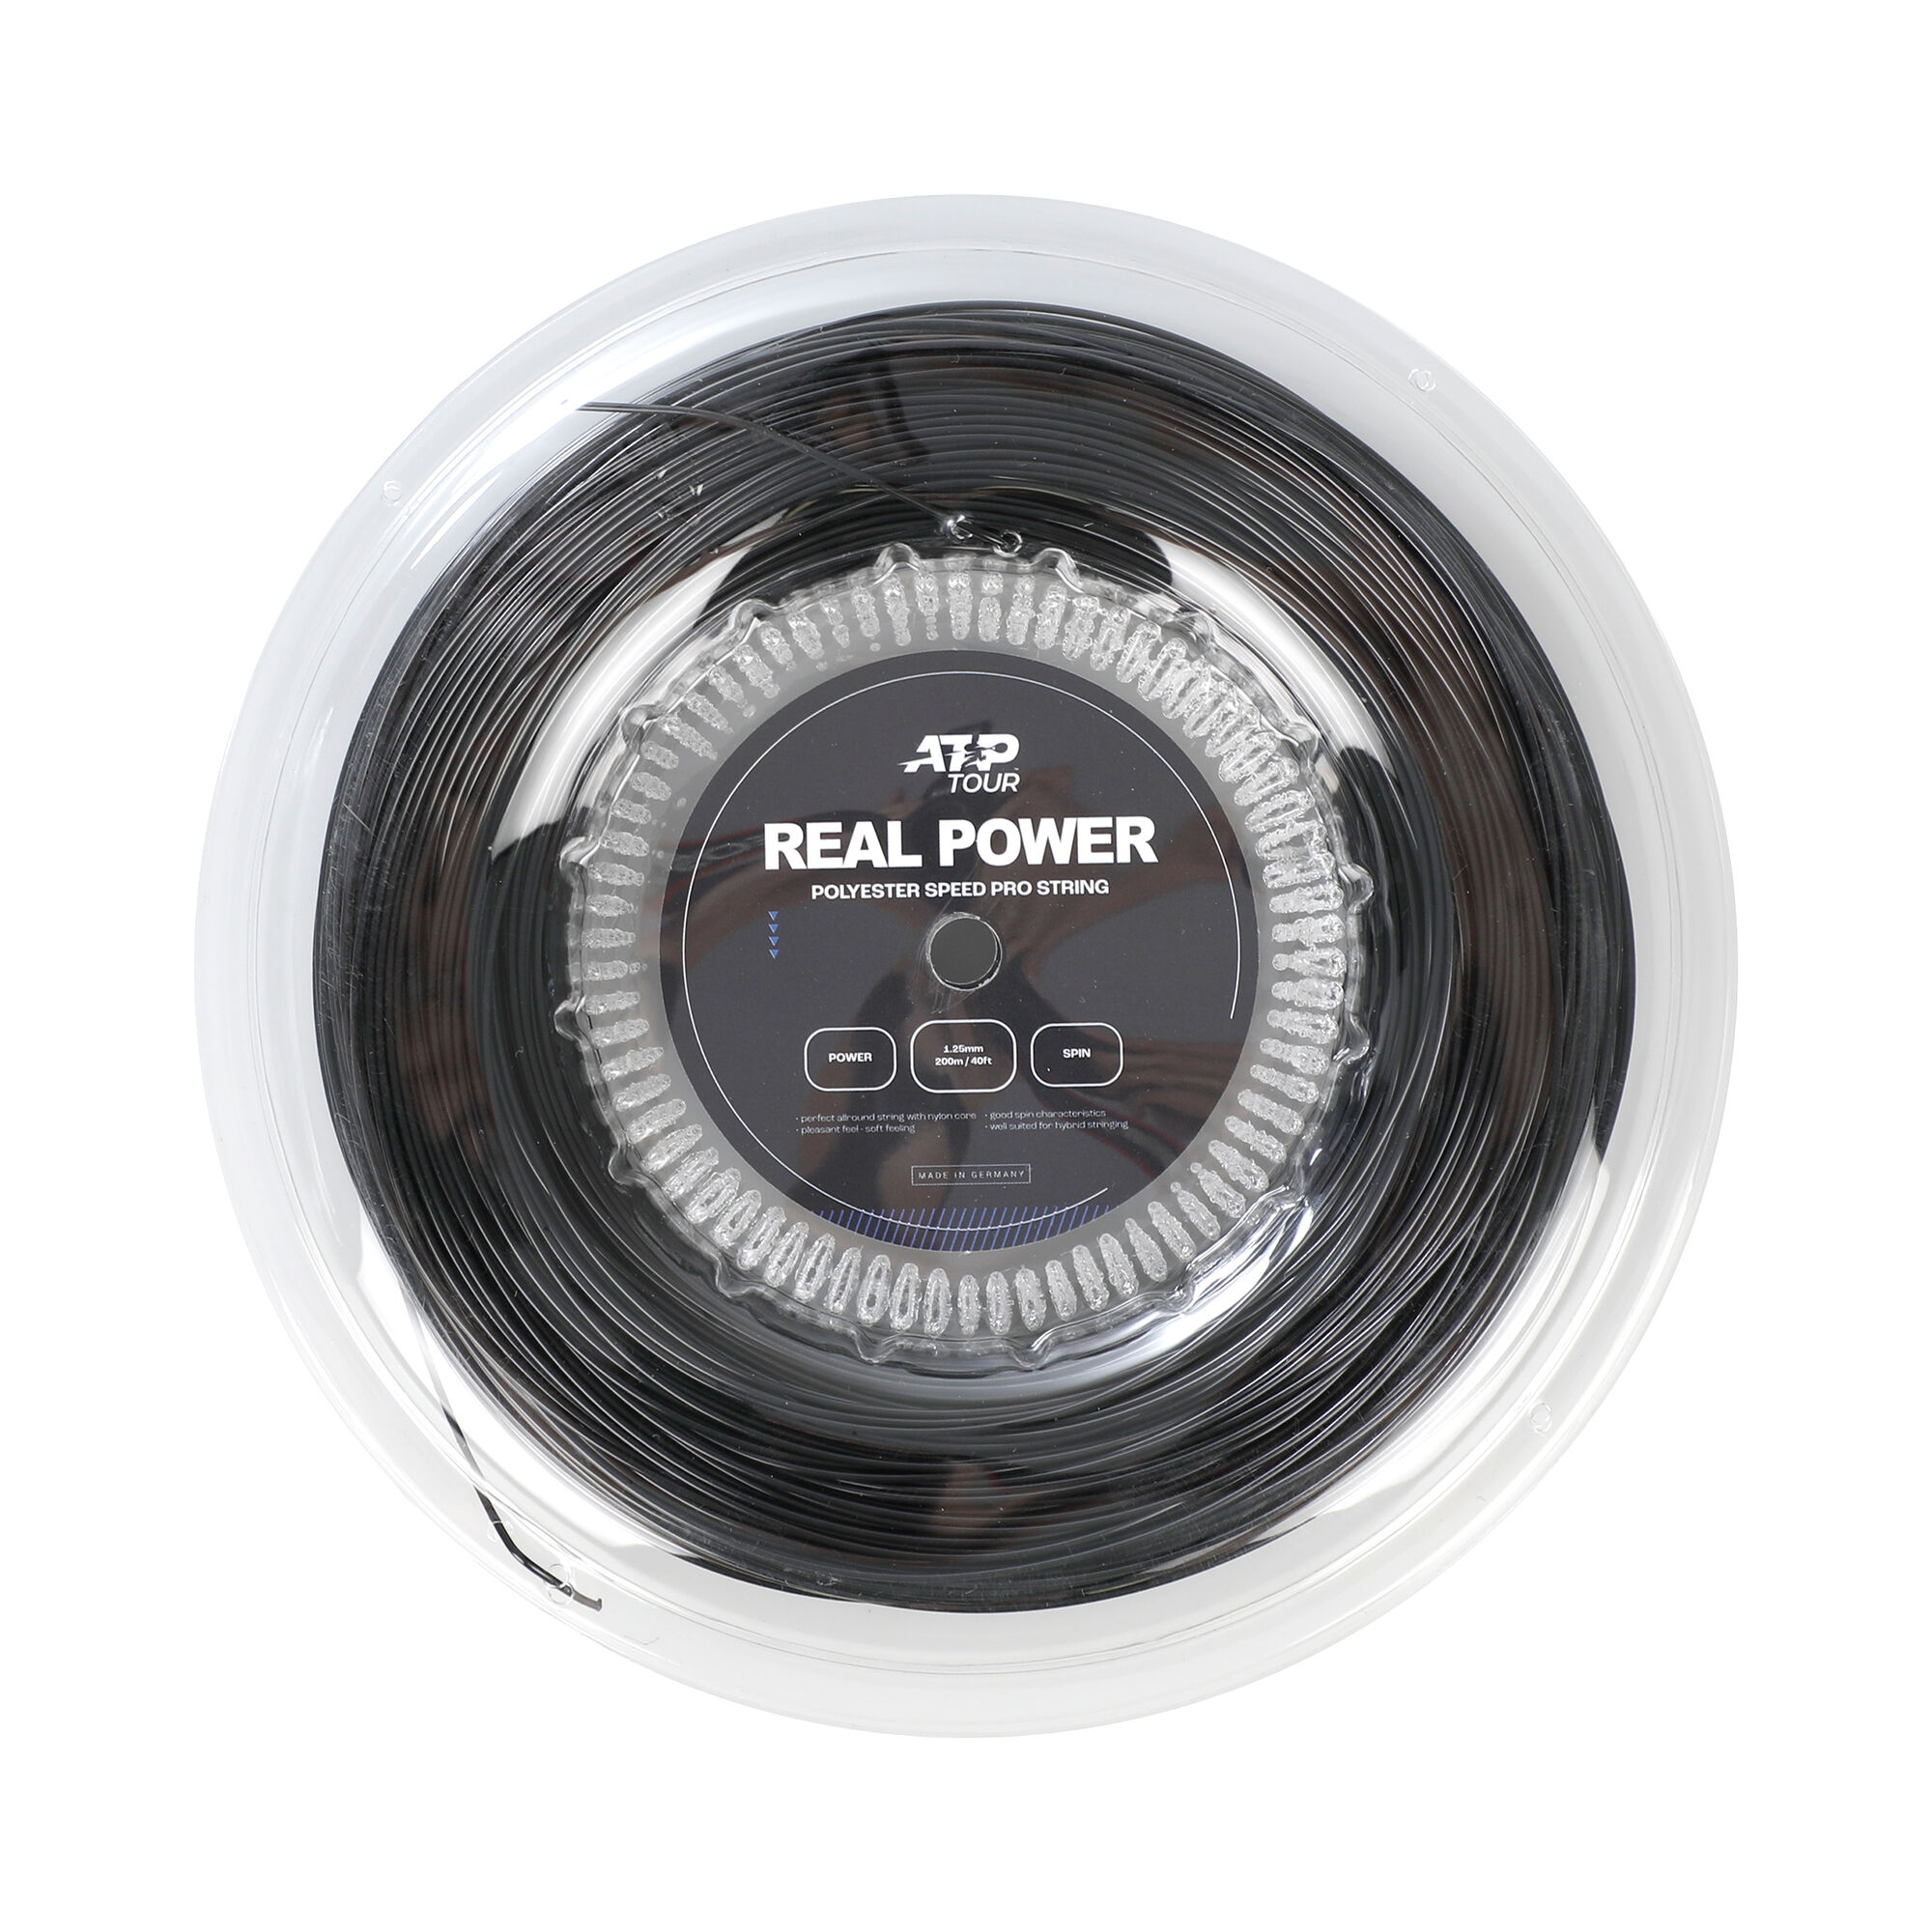 Real Power String Reel 200m - Black